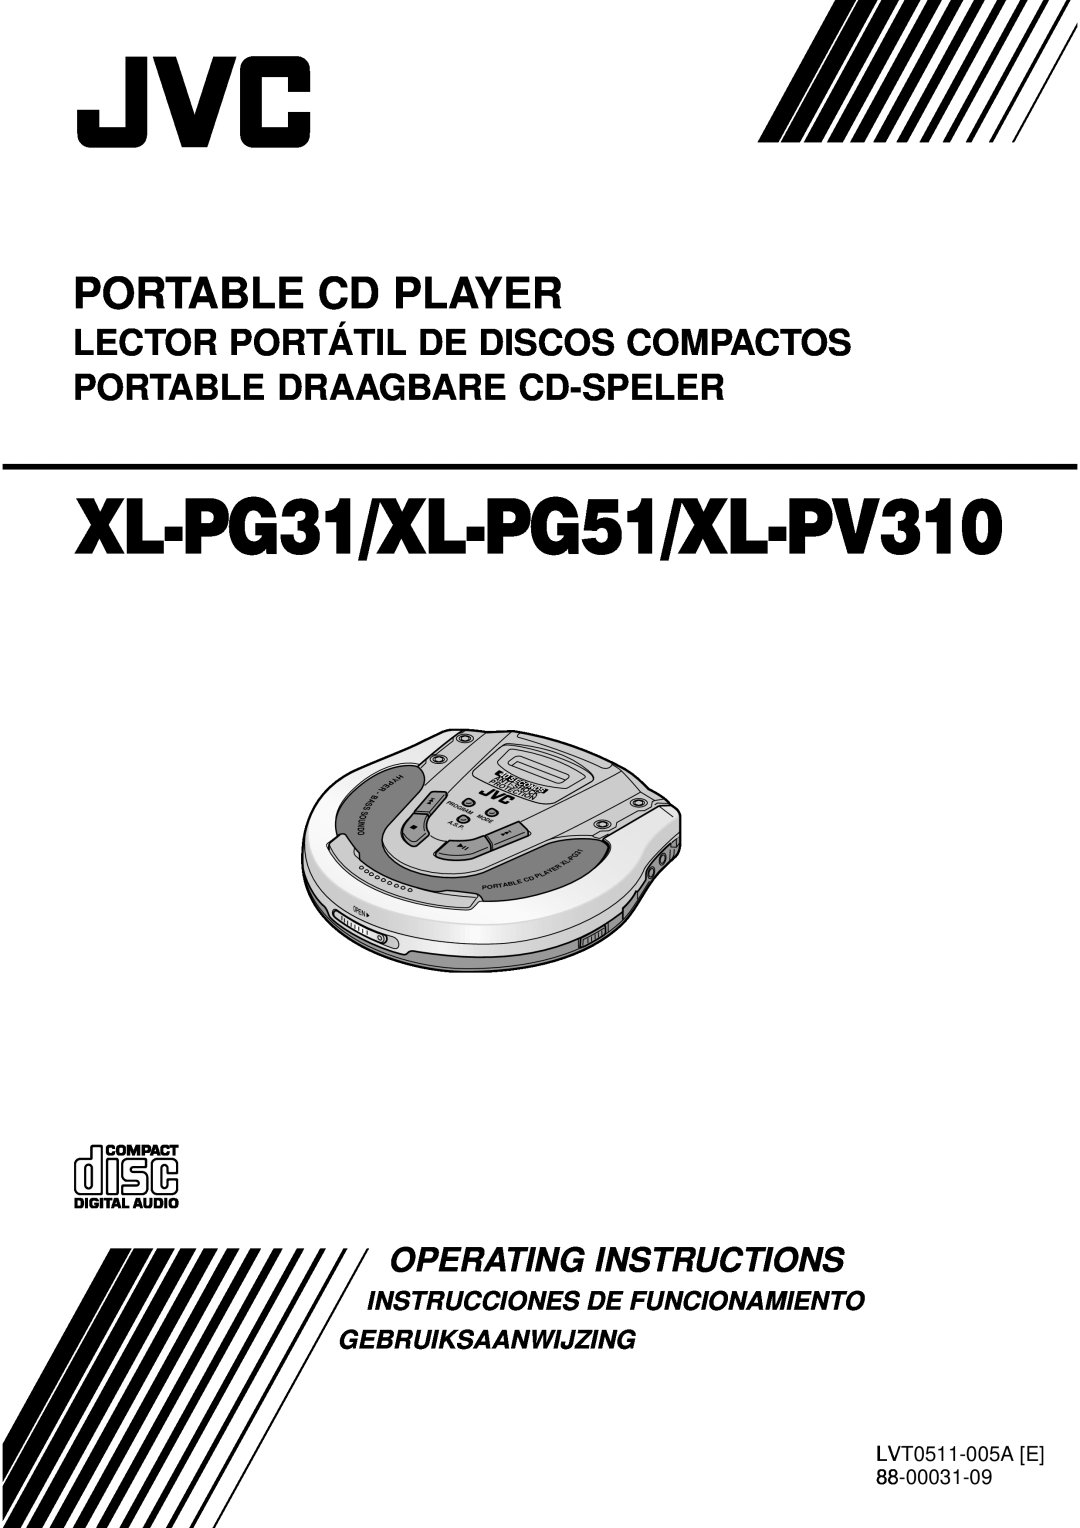 JVC operating instructions LVT0511-005A E, XL-PG31/XL-PG51/XL-PV310, Portable Cd Player, Operating Instructions, Shond 